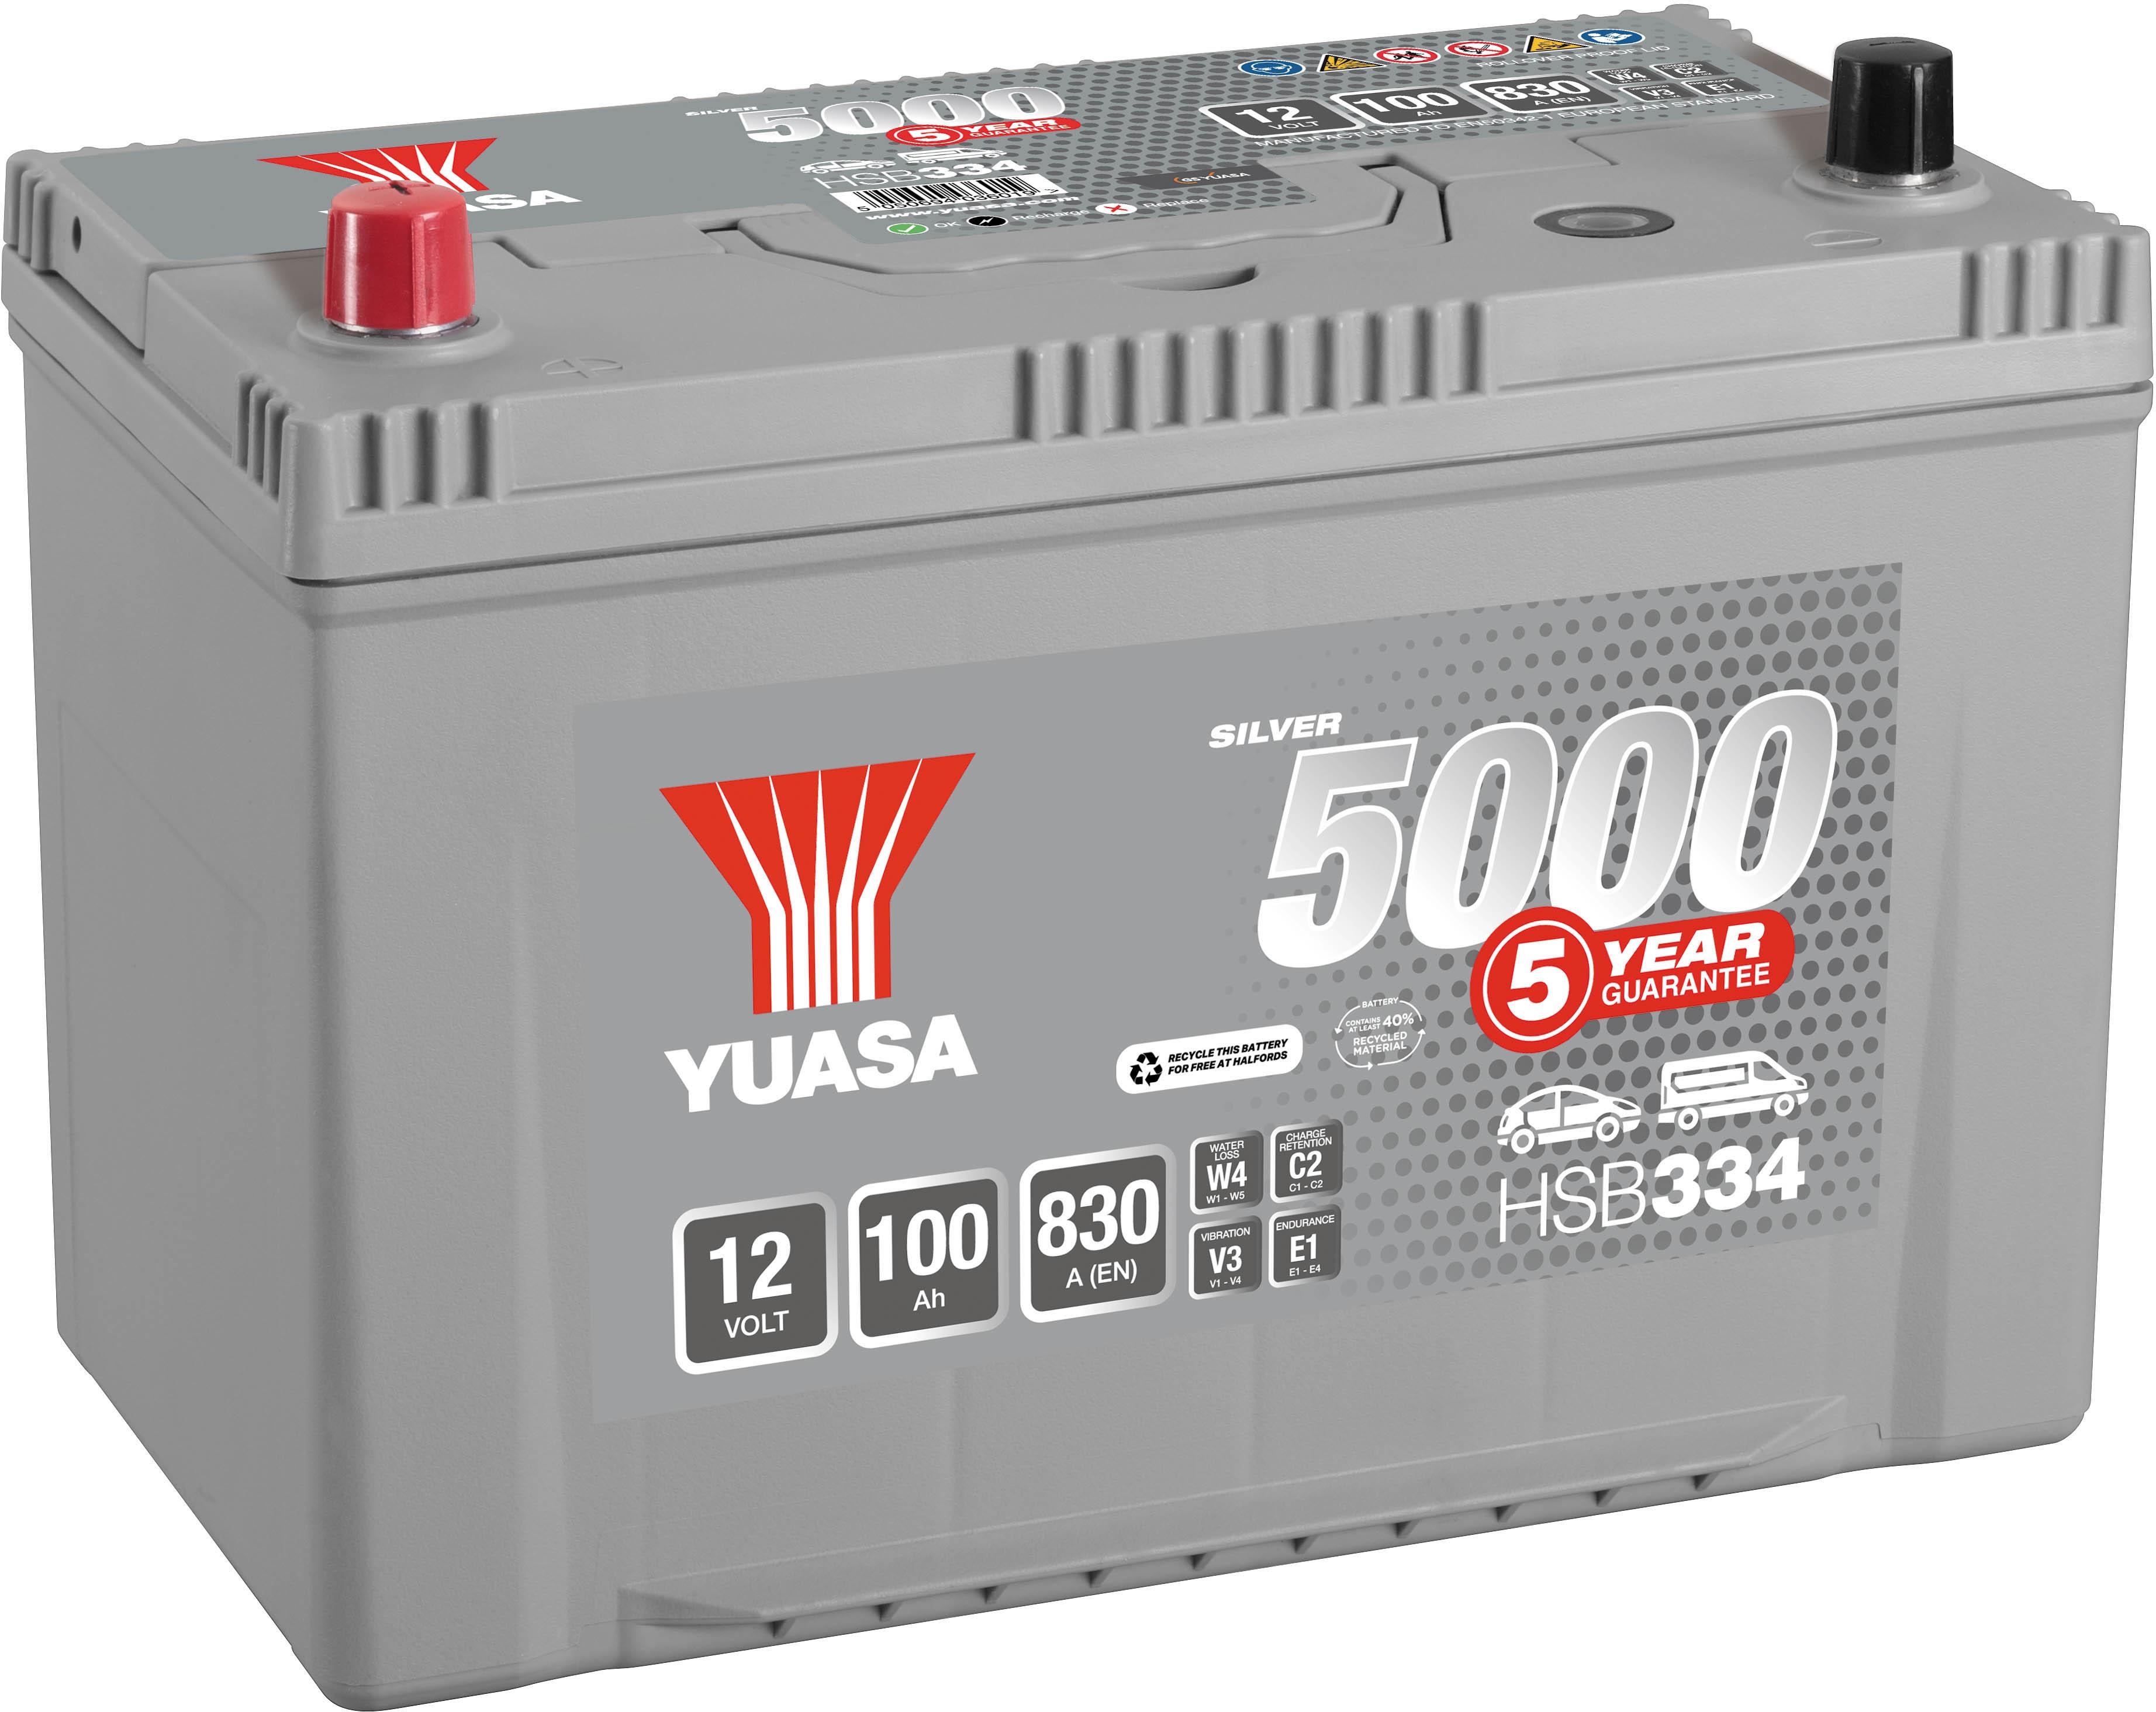 Yuasa Hsb334 Silver 12V Car Battery 5 Year Guarantee